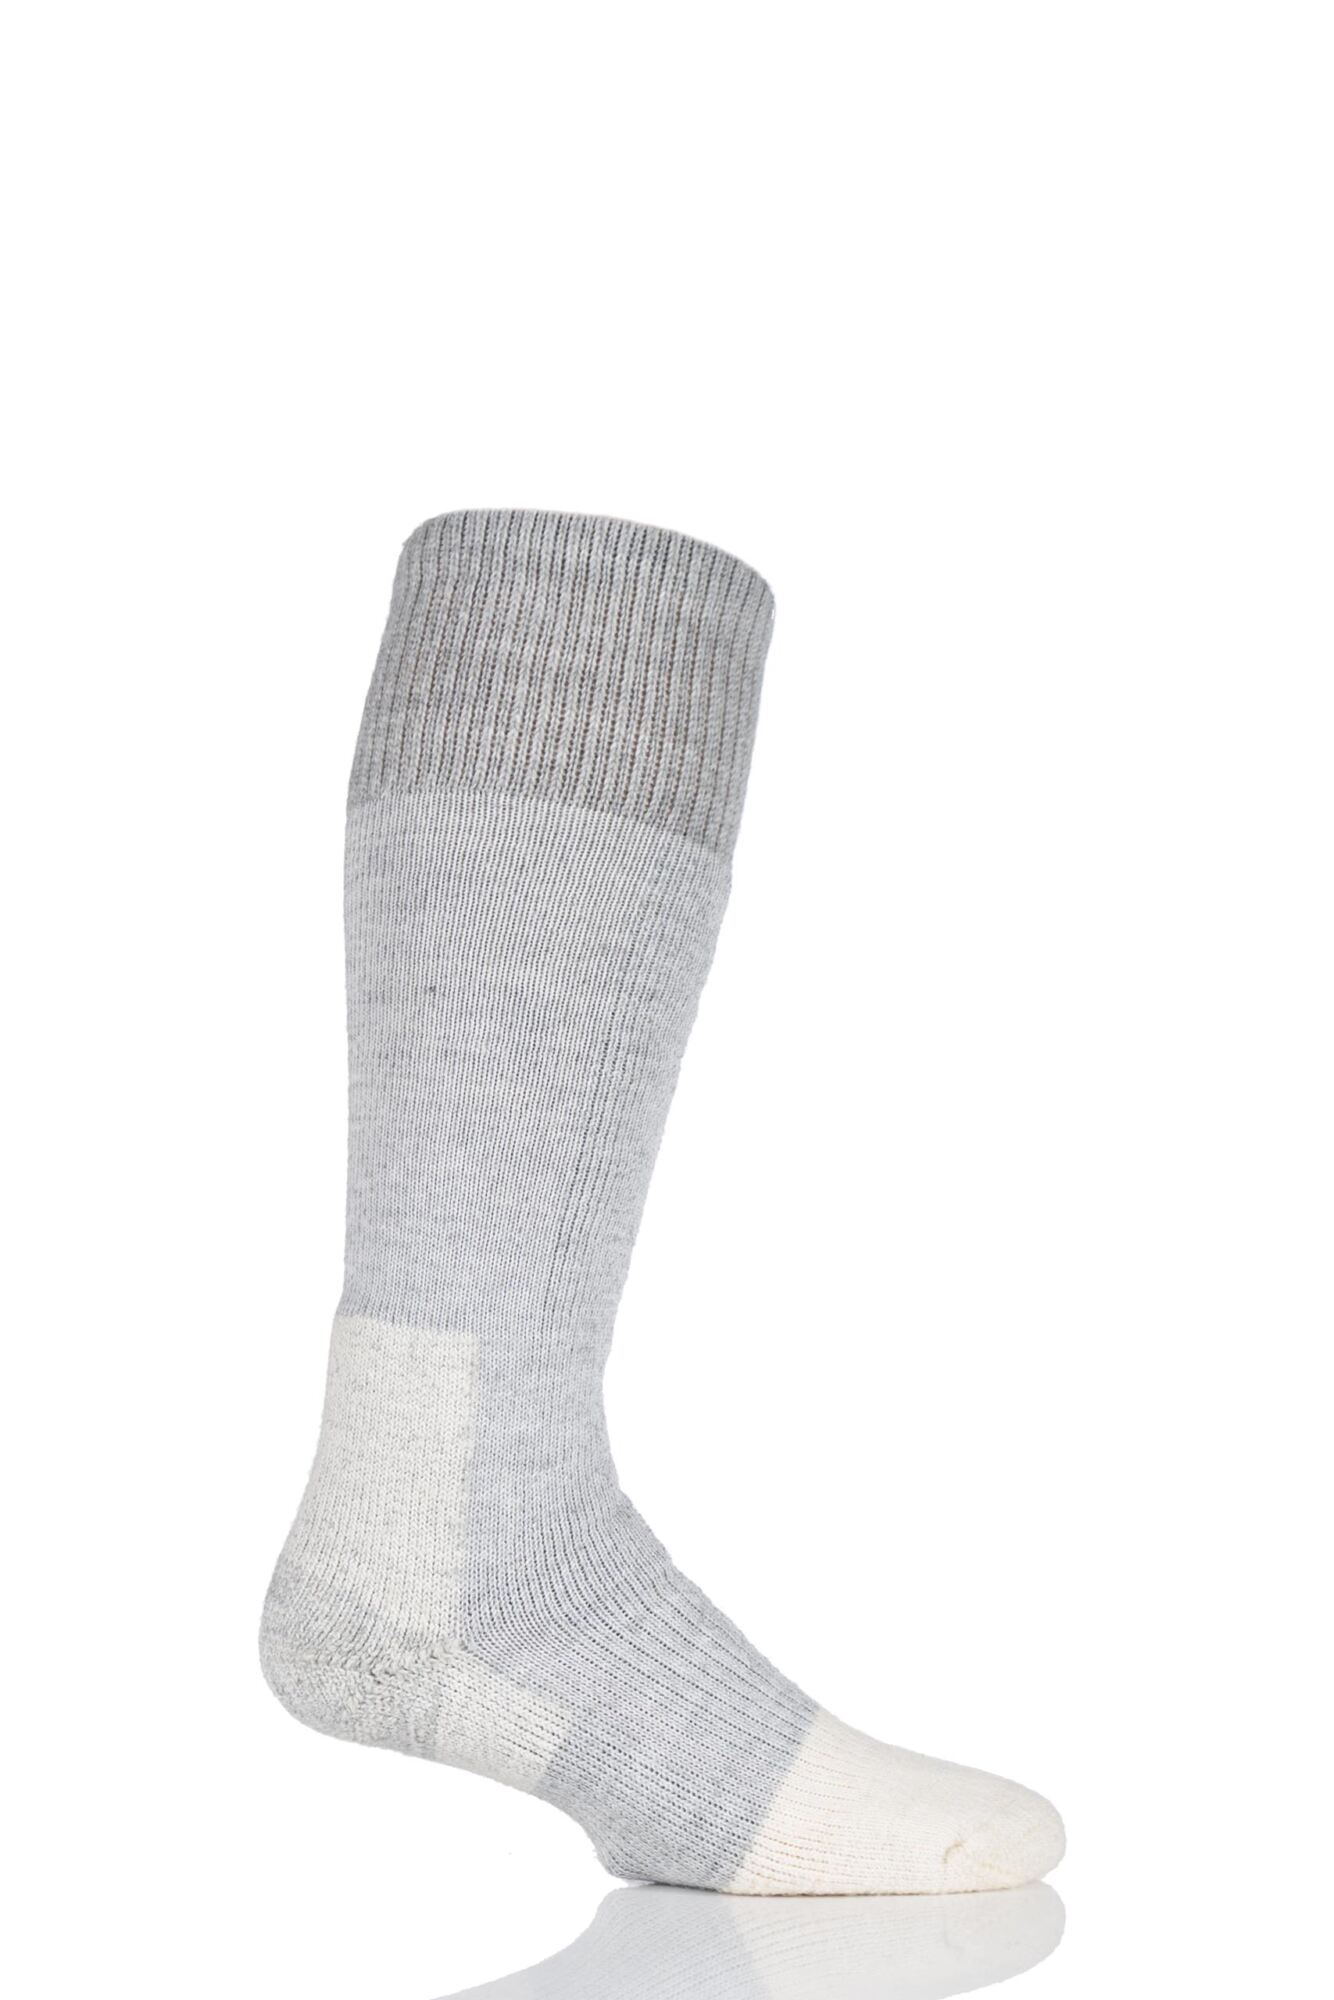 Thorlos Mountaineering Thick Cushion Socks With Wool & Thorlon